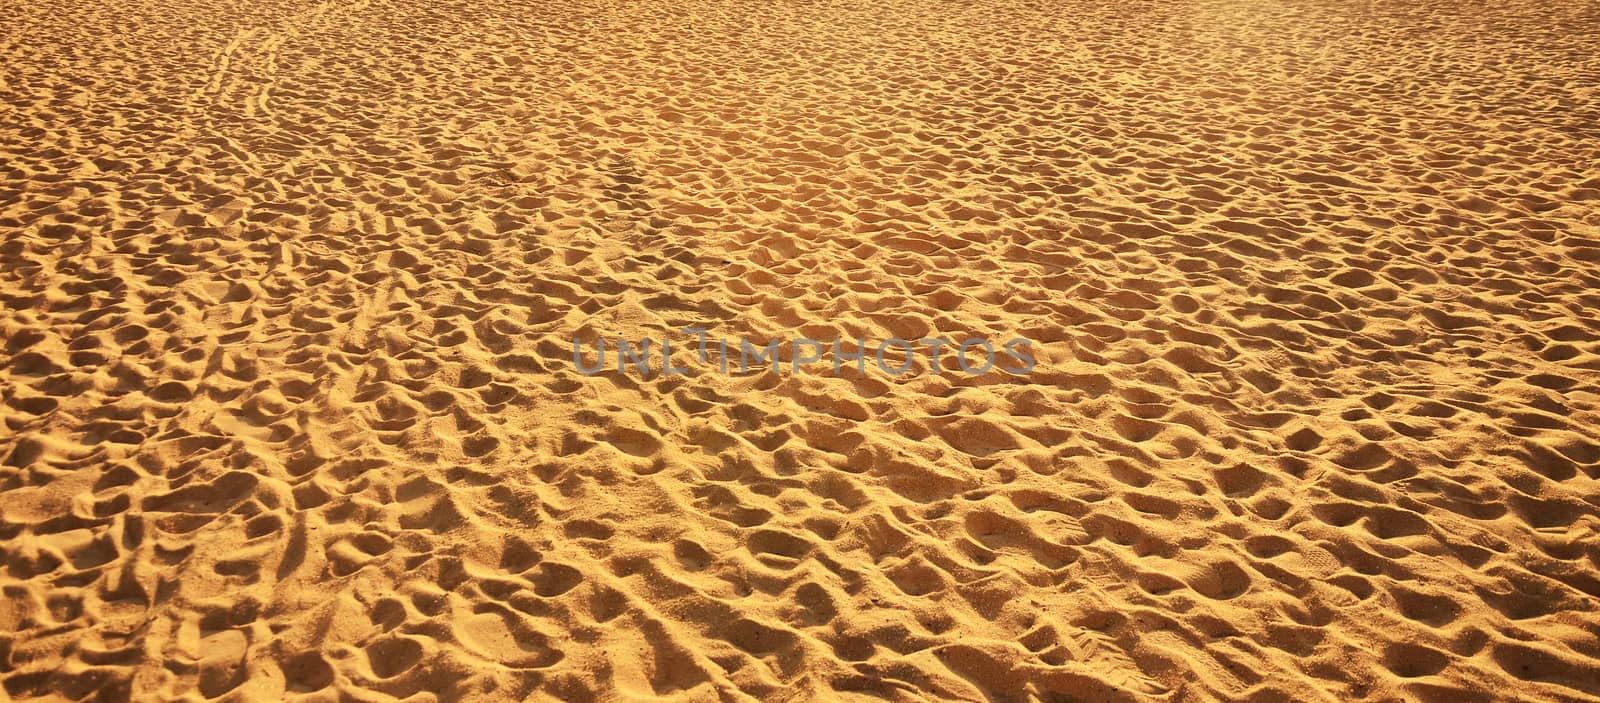 Sand background by jengit